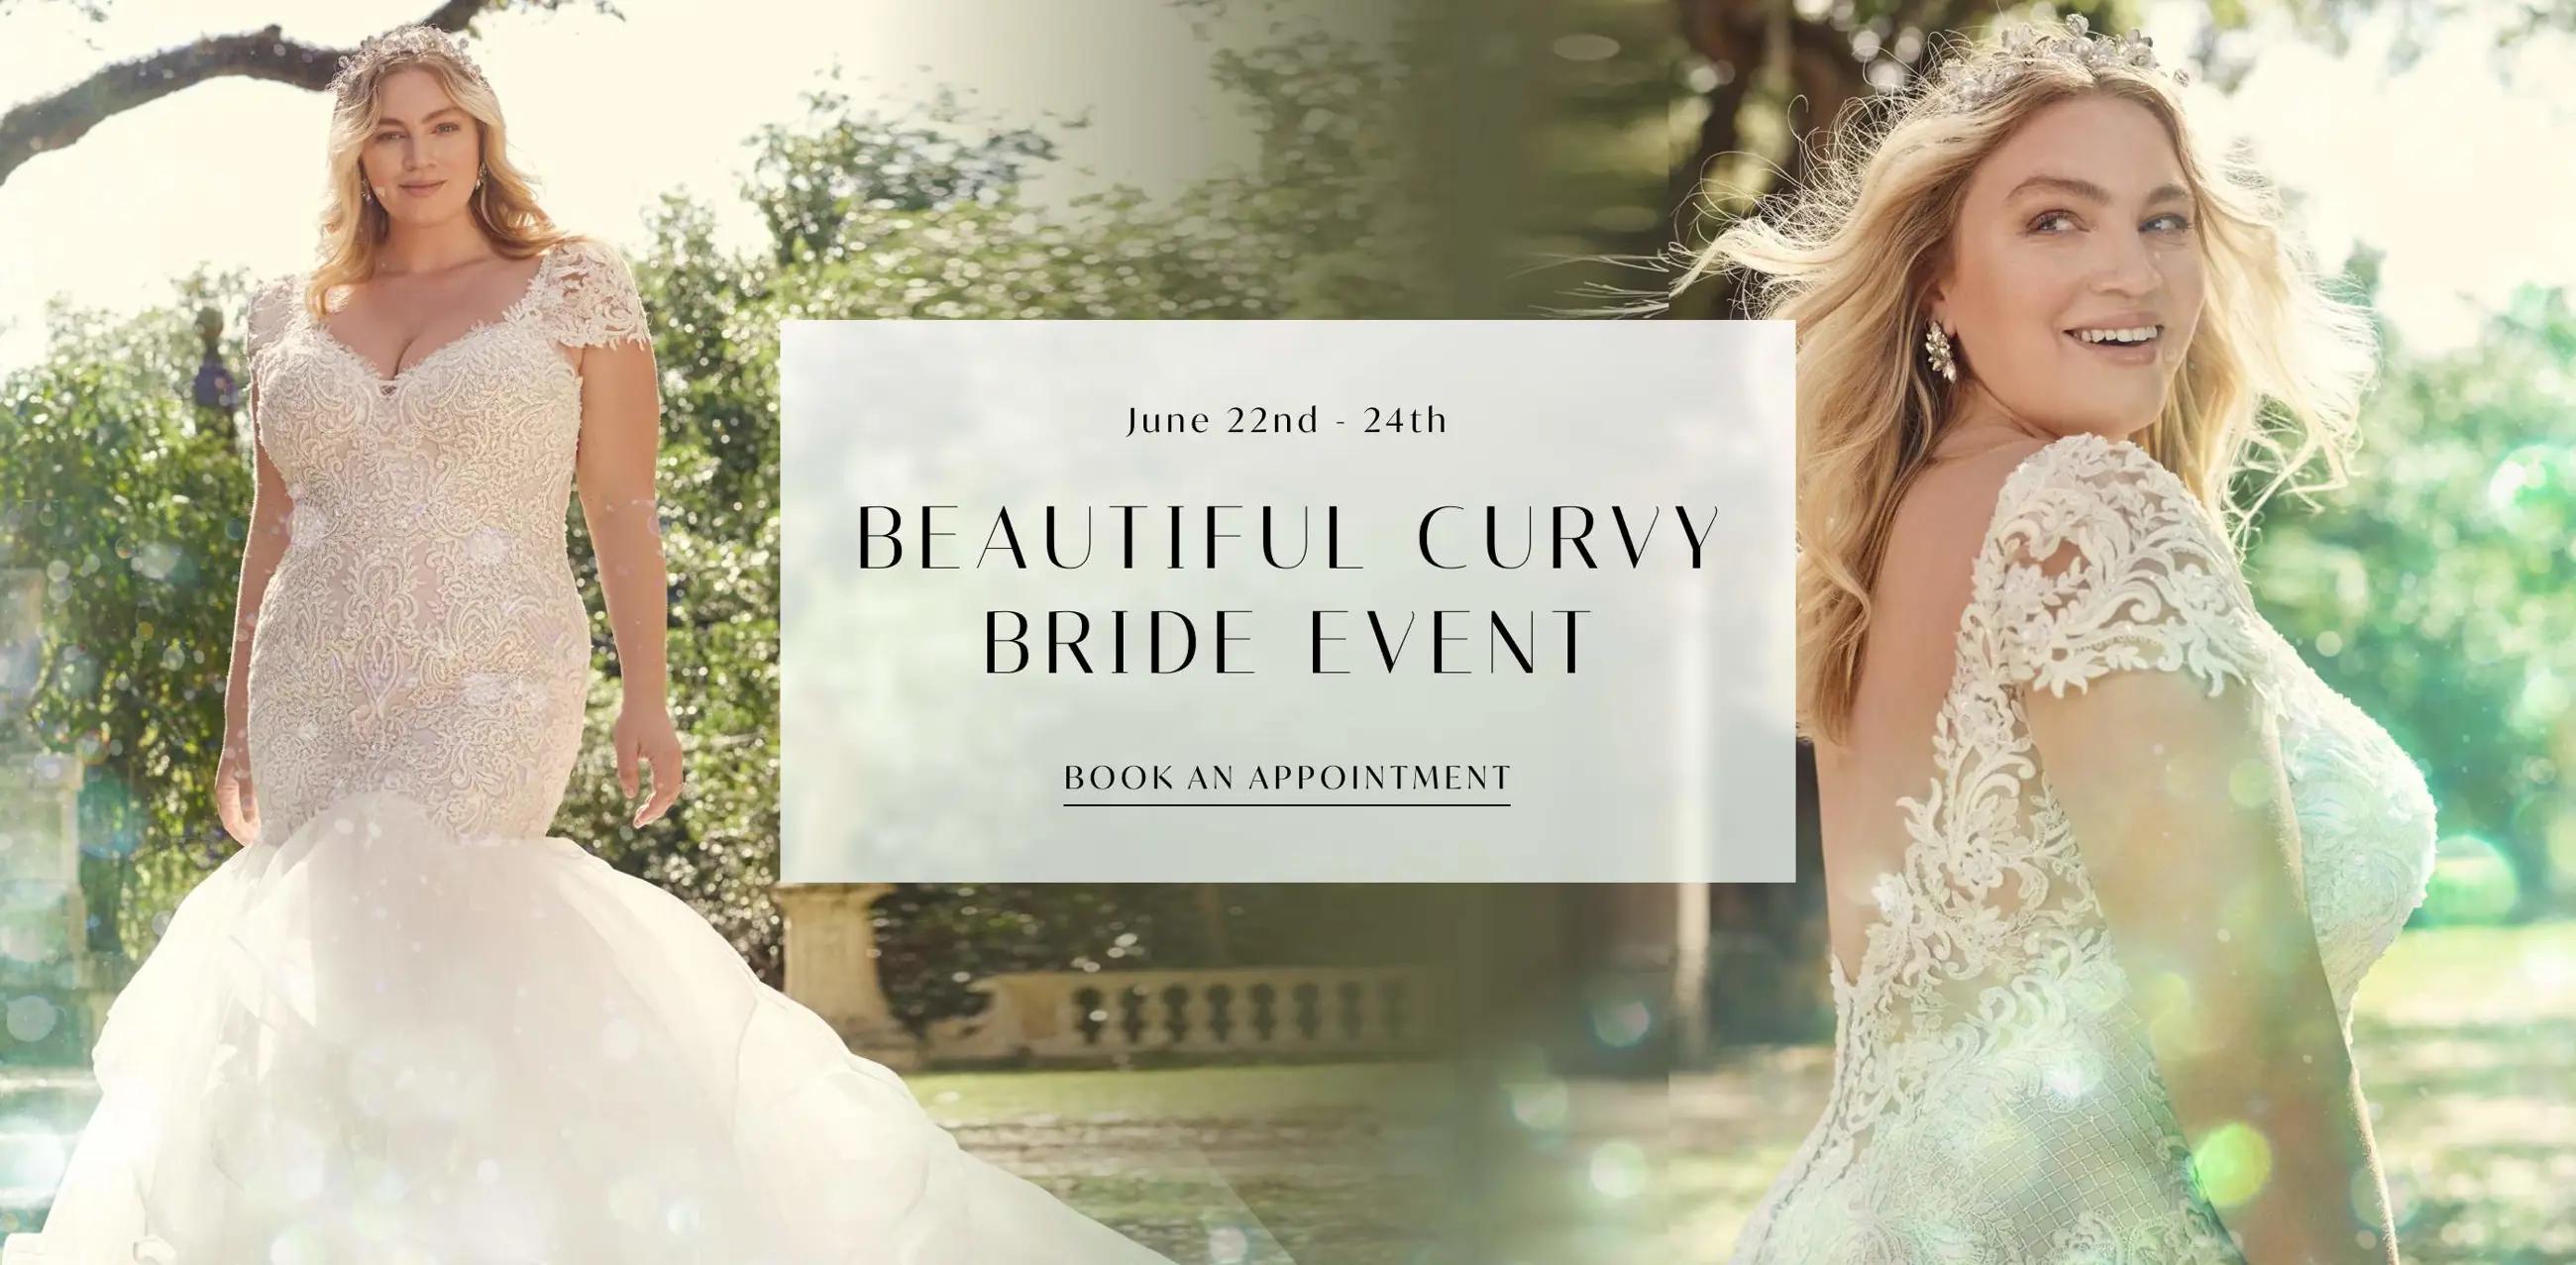 Beautiful Curvy Bride event on June 22